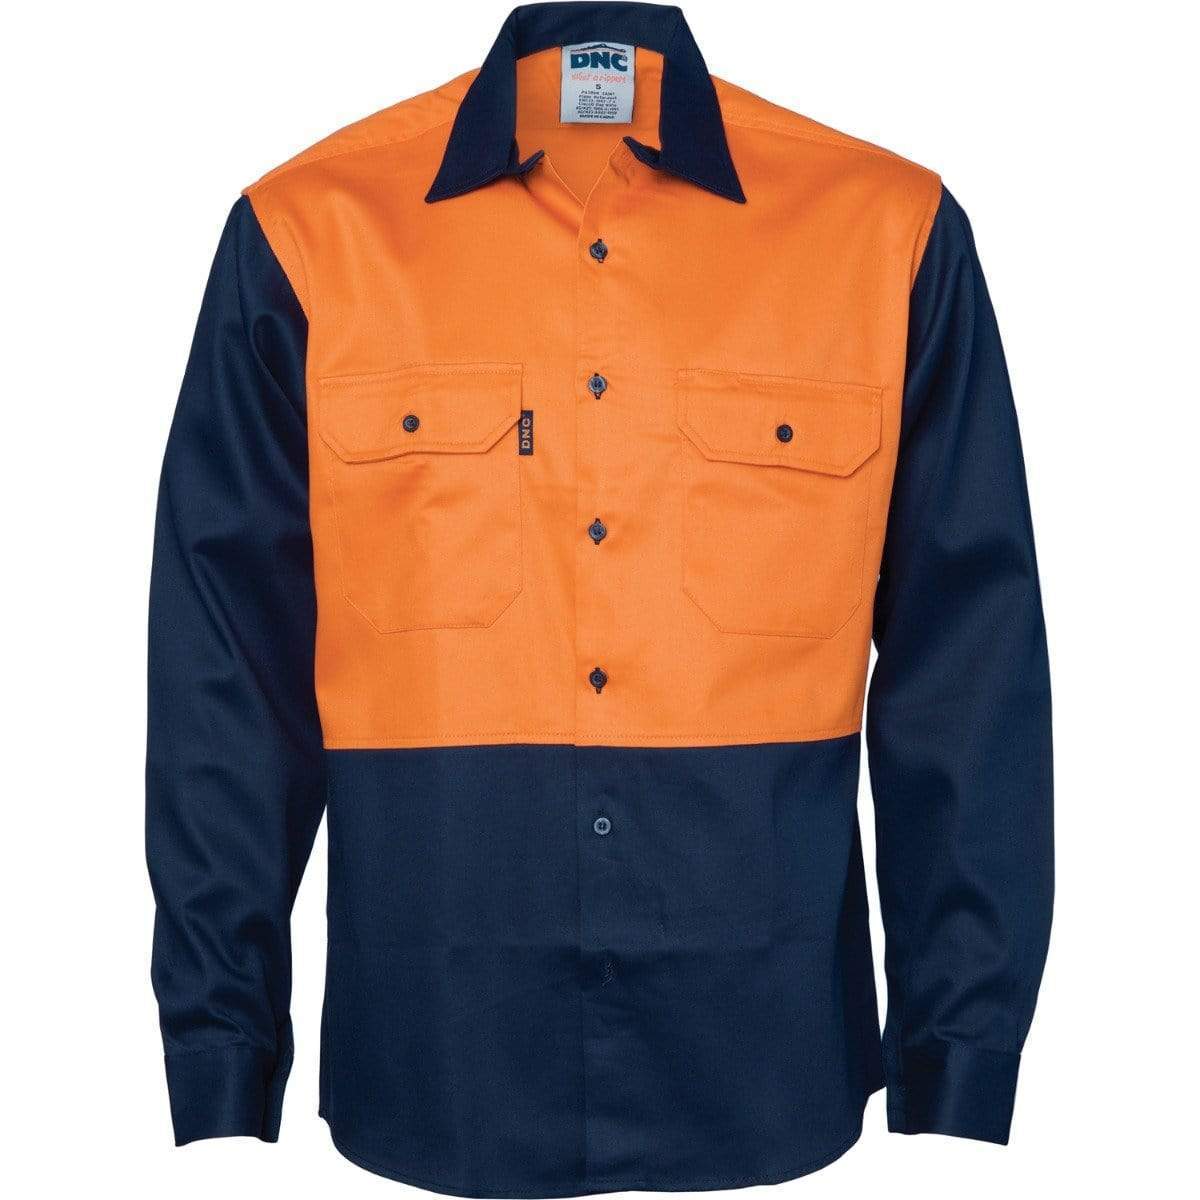 Dnc Workwear Patron Saint Flame Retardant Two-tone Long Sleeve Drill Shirt - 3406 Work Wear DNC Workwear Orange/Navy S 